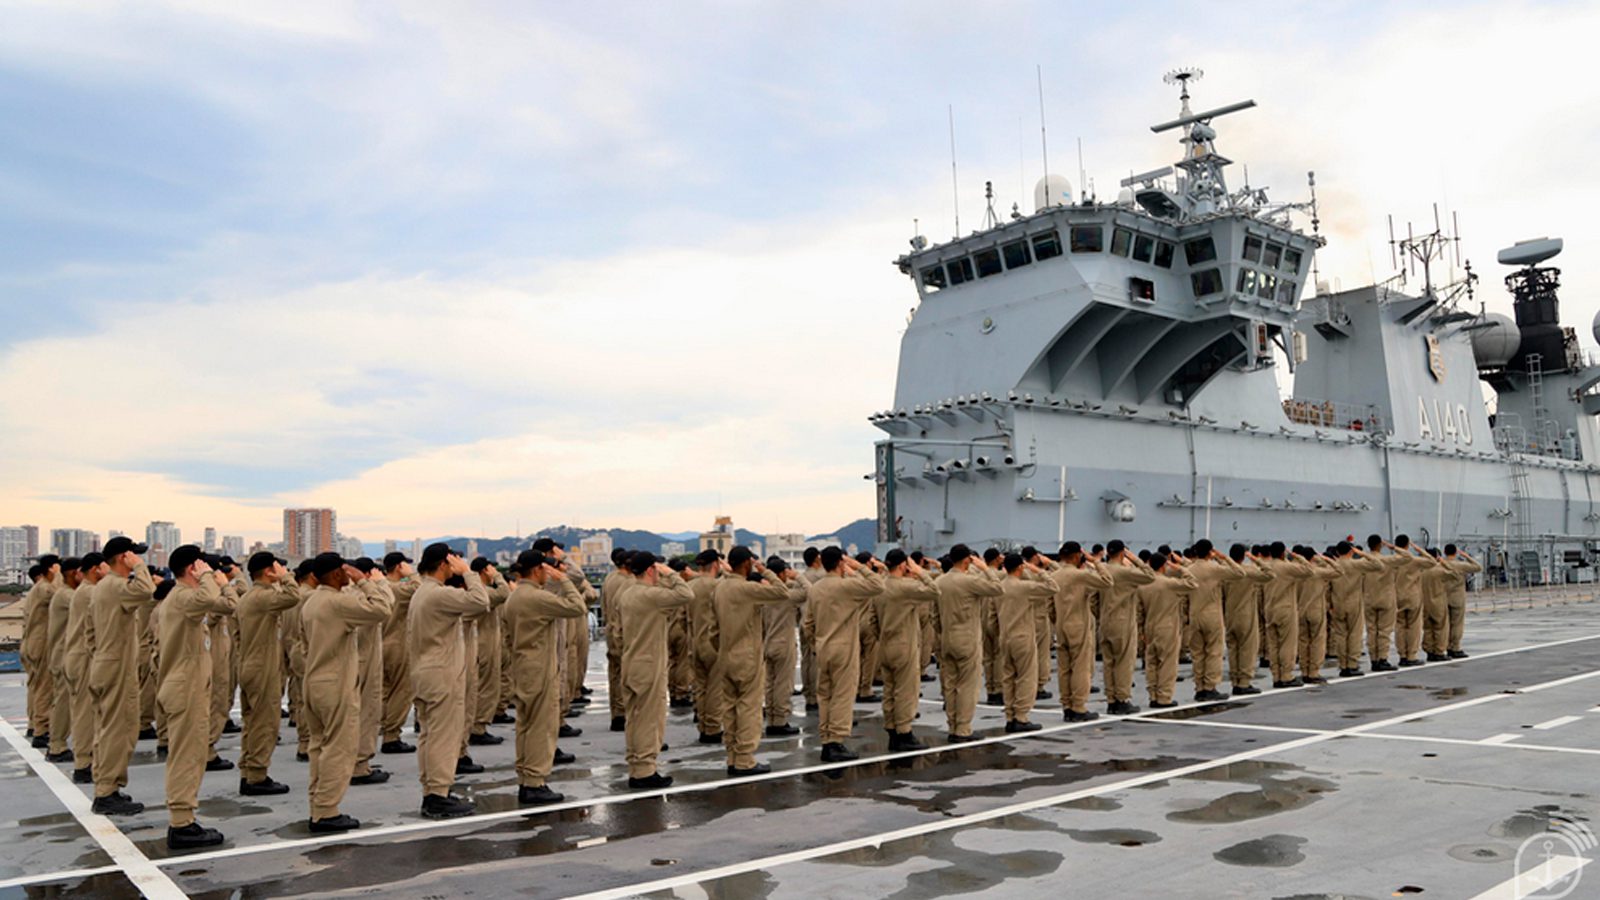 Future Officers of the Brazilian Merchant Navy embark on the ship Capitania